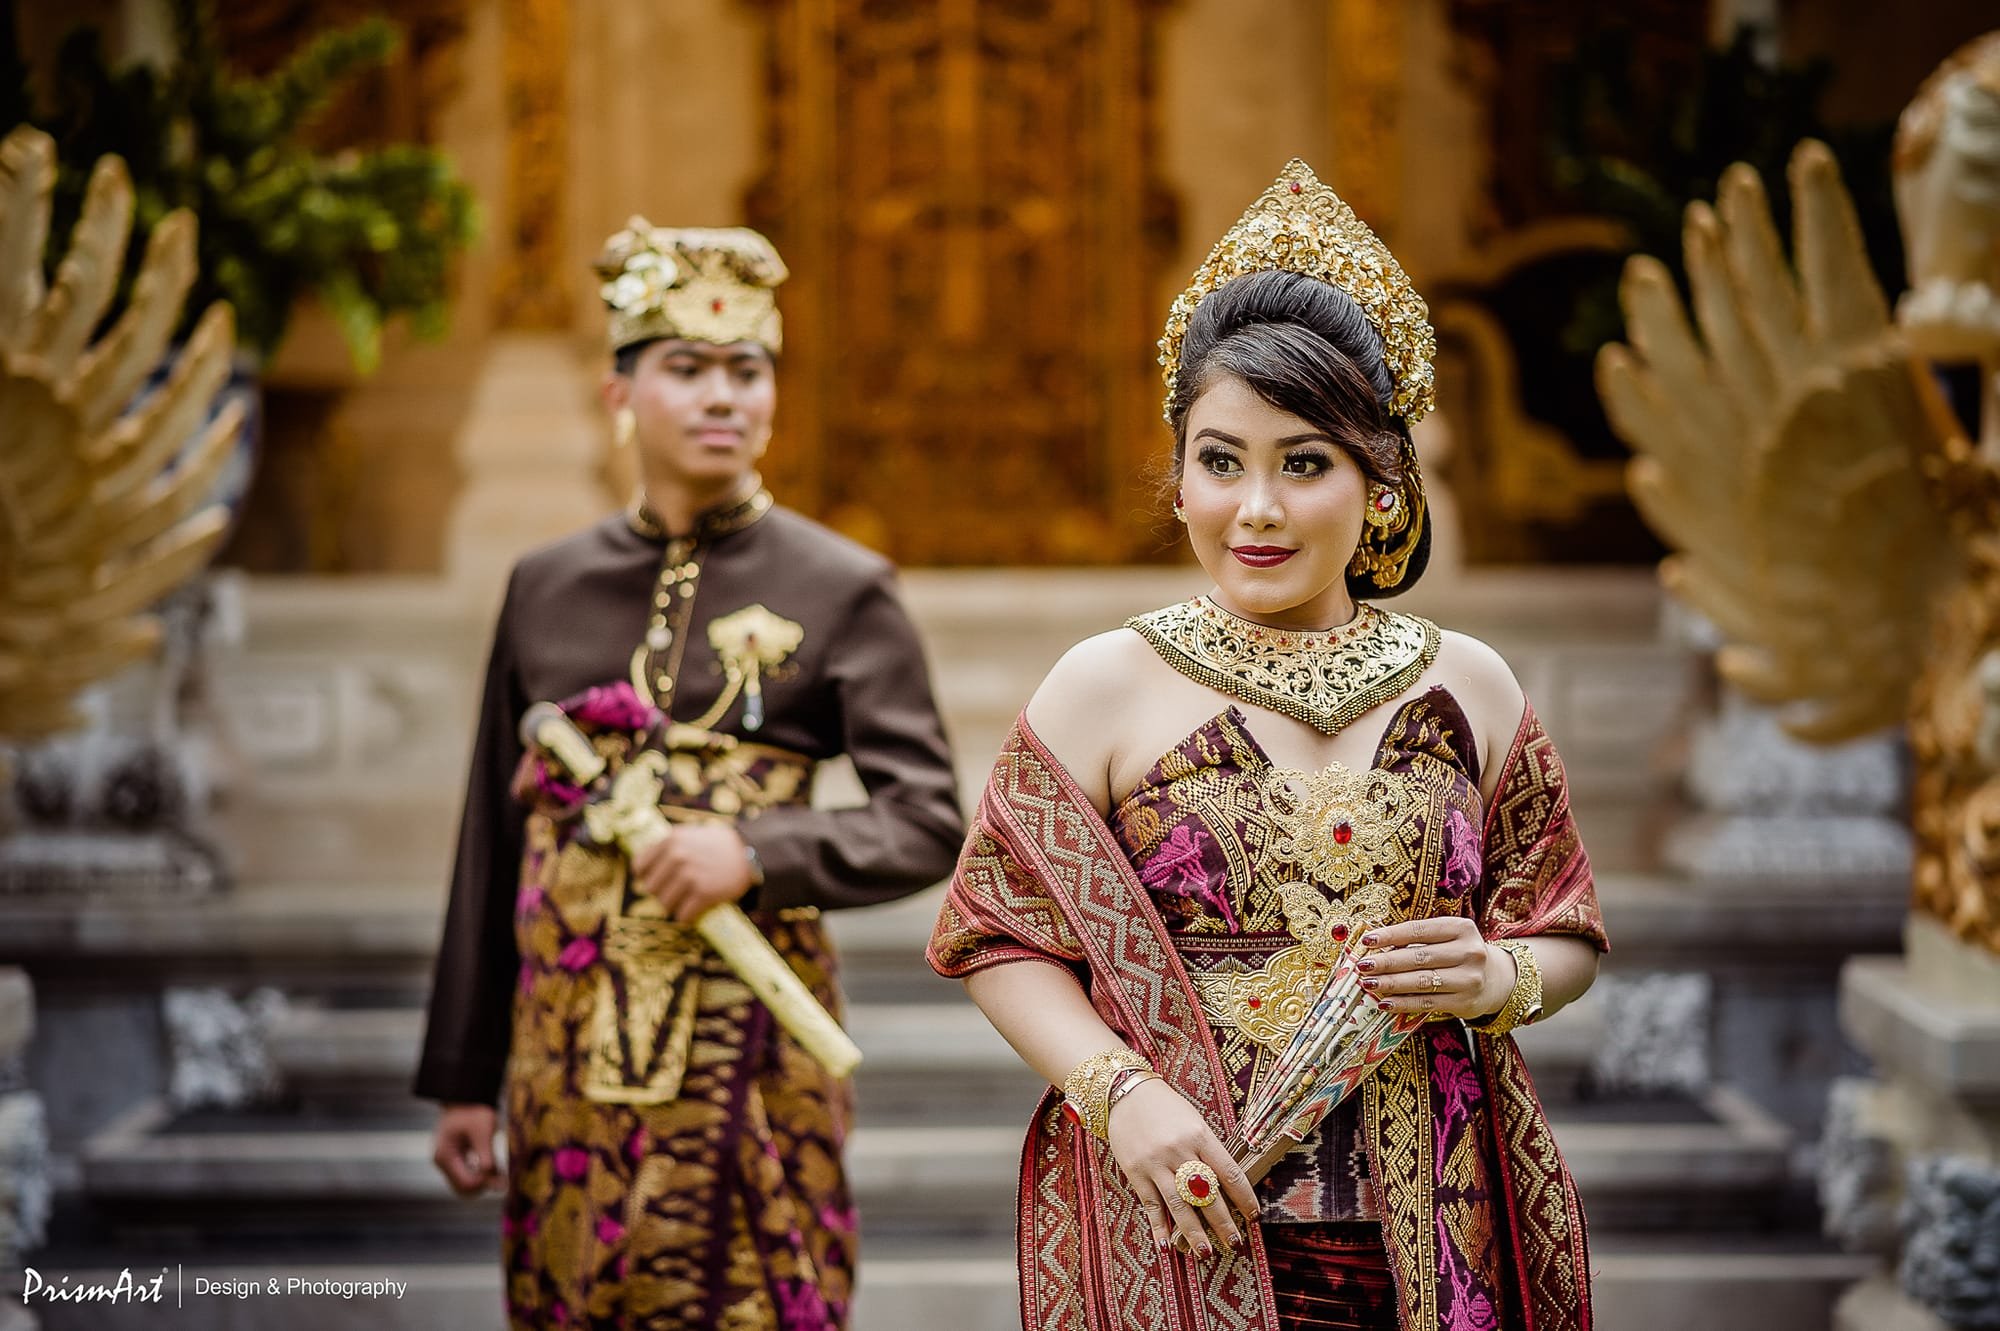 Foto Prewedding Bali Sederhana Plaza Indo